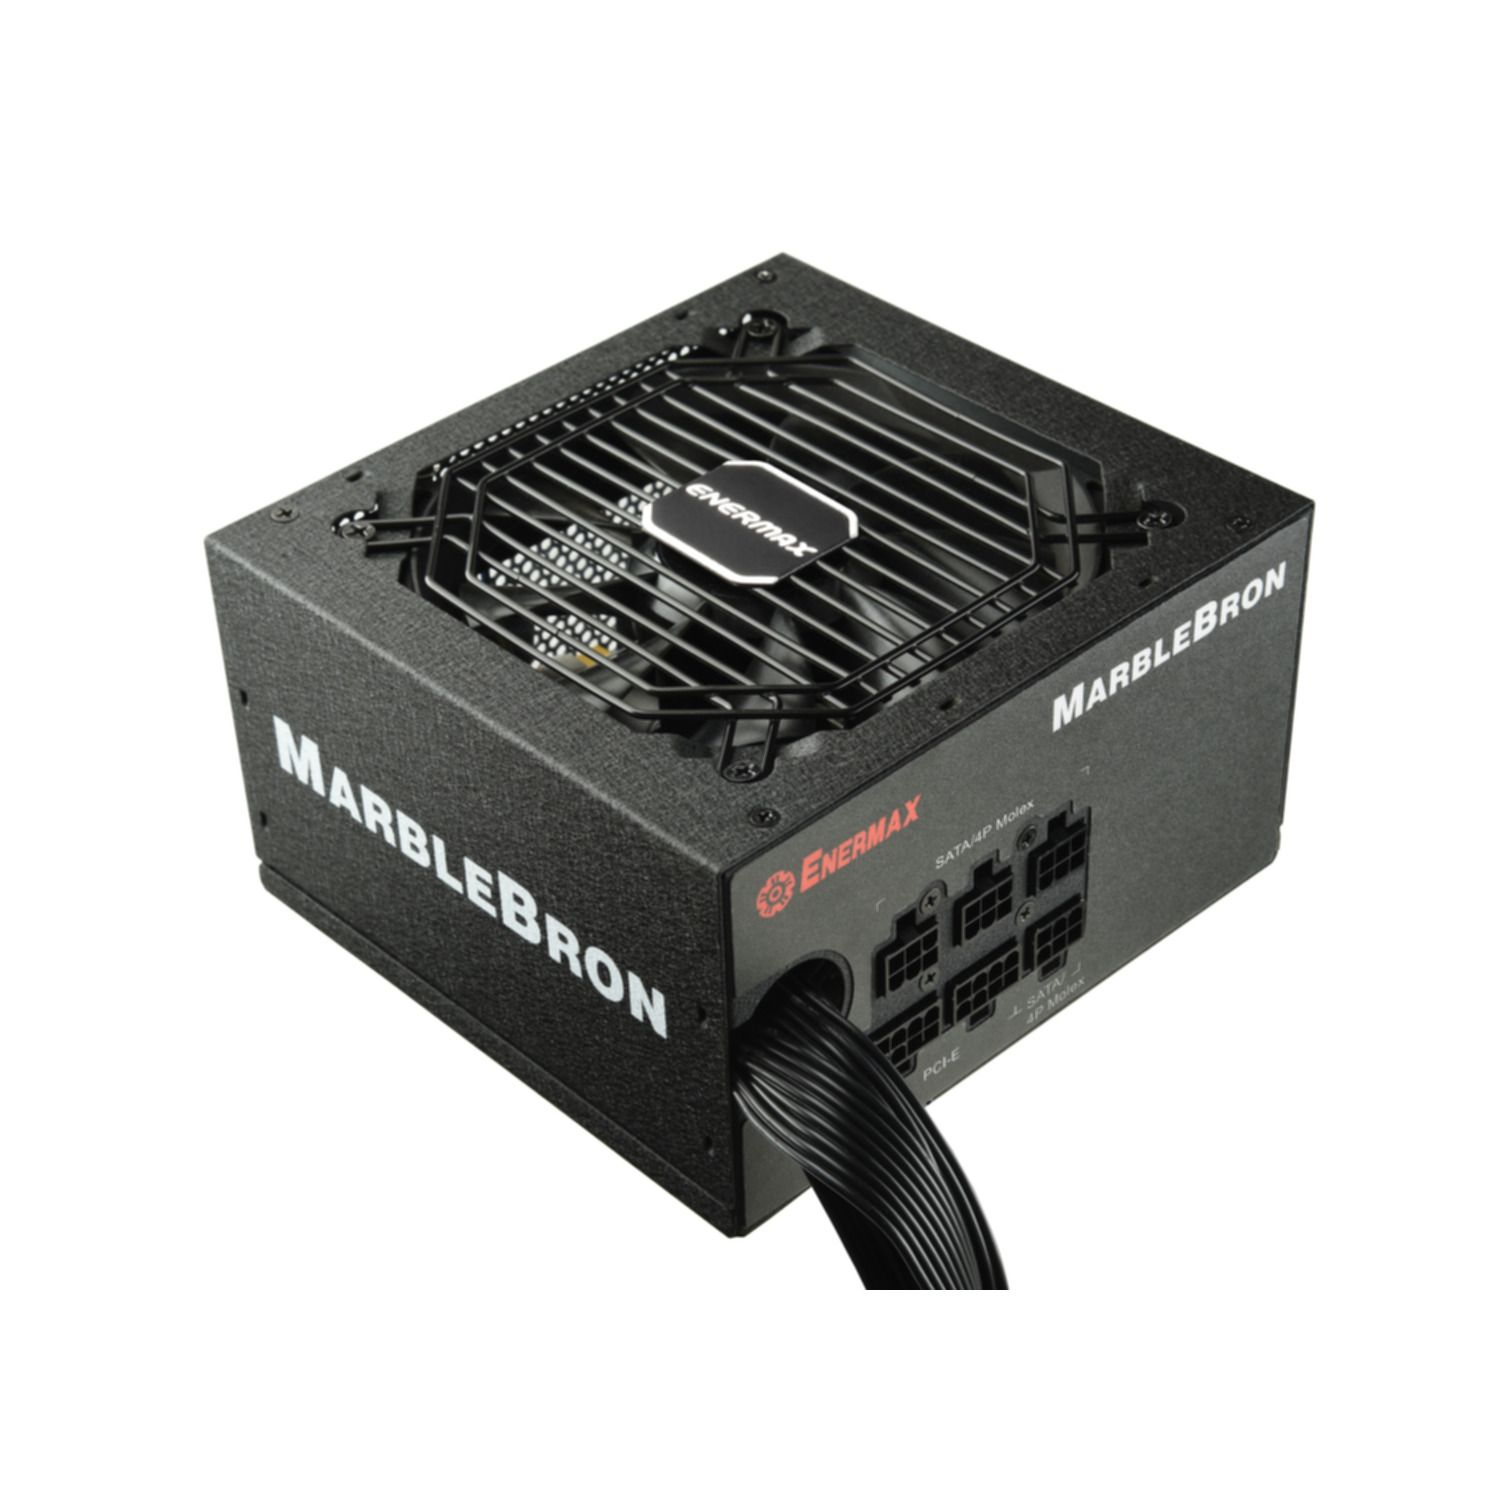 MARBLEBRON Watt 750 Netzteil PC ENERMAX